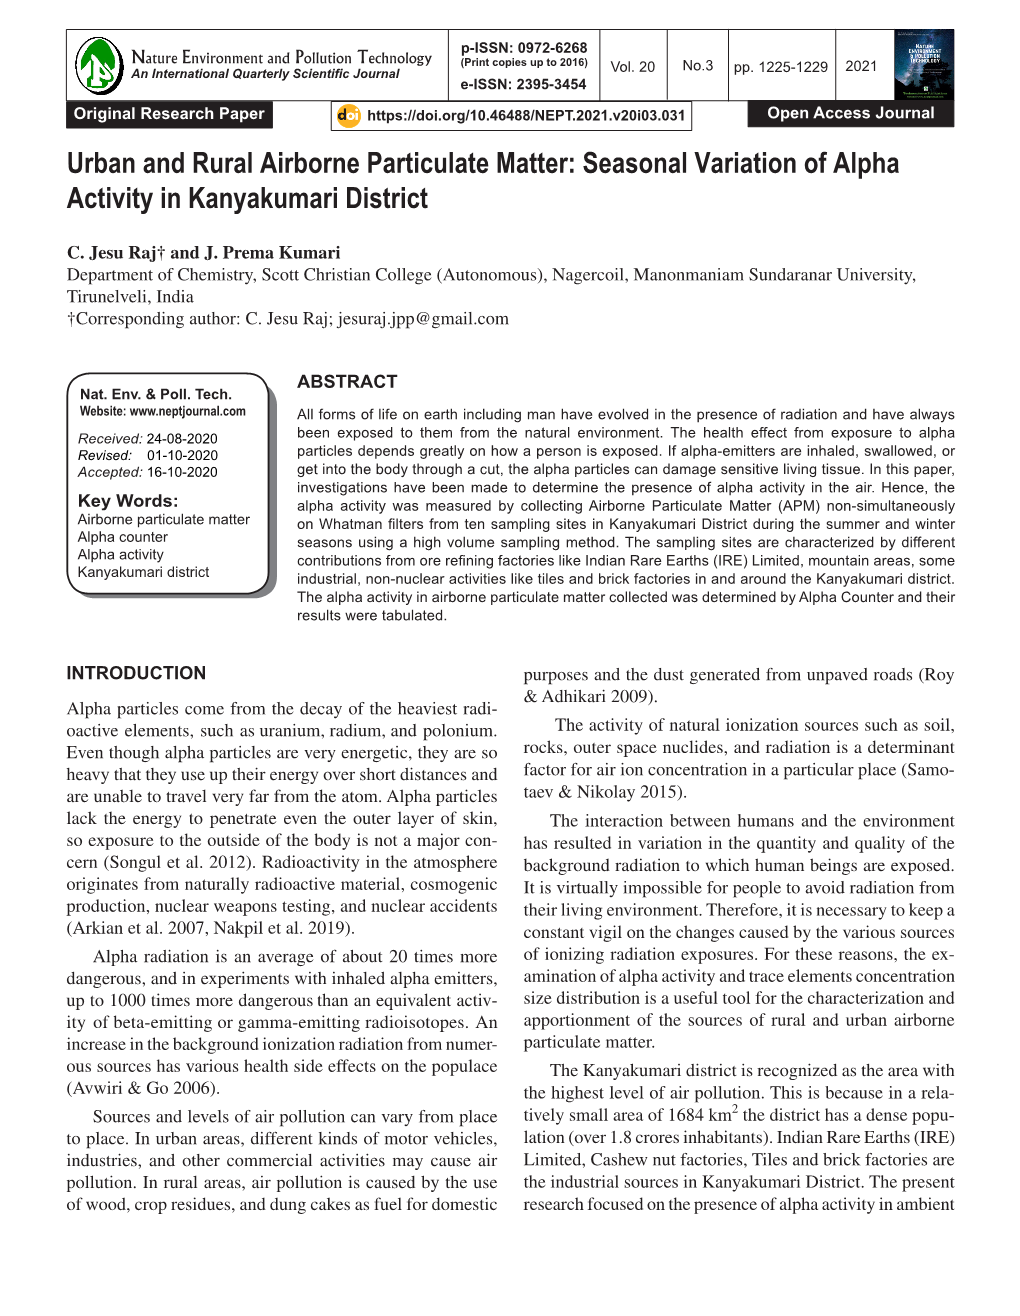 Urban and Rural Airborne Particulate Matter: Seasonal Variation of Alpha Activity in Kanyakumari District